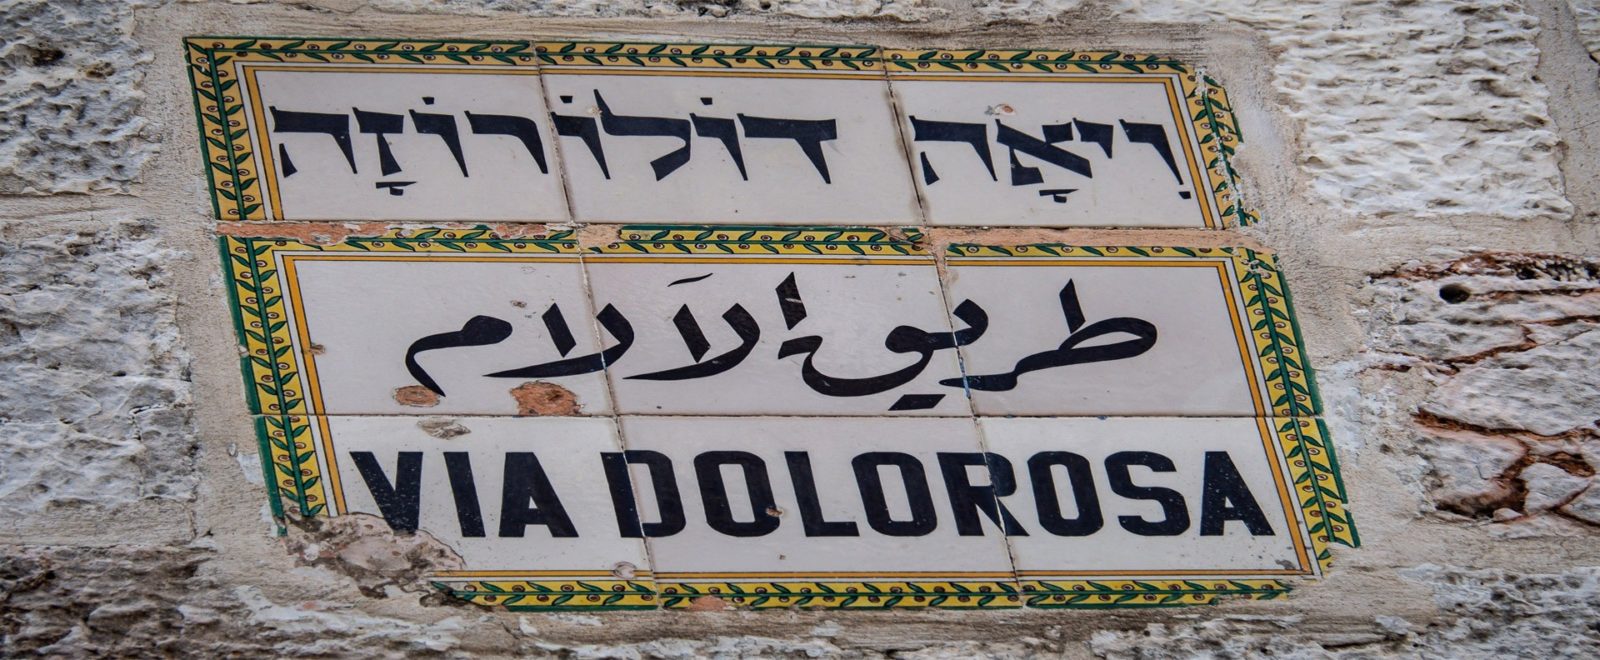 Via Dolorosa in Jerusalem Israel